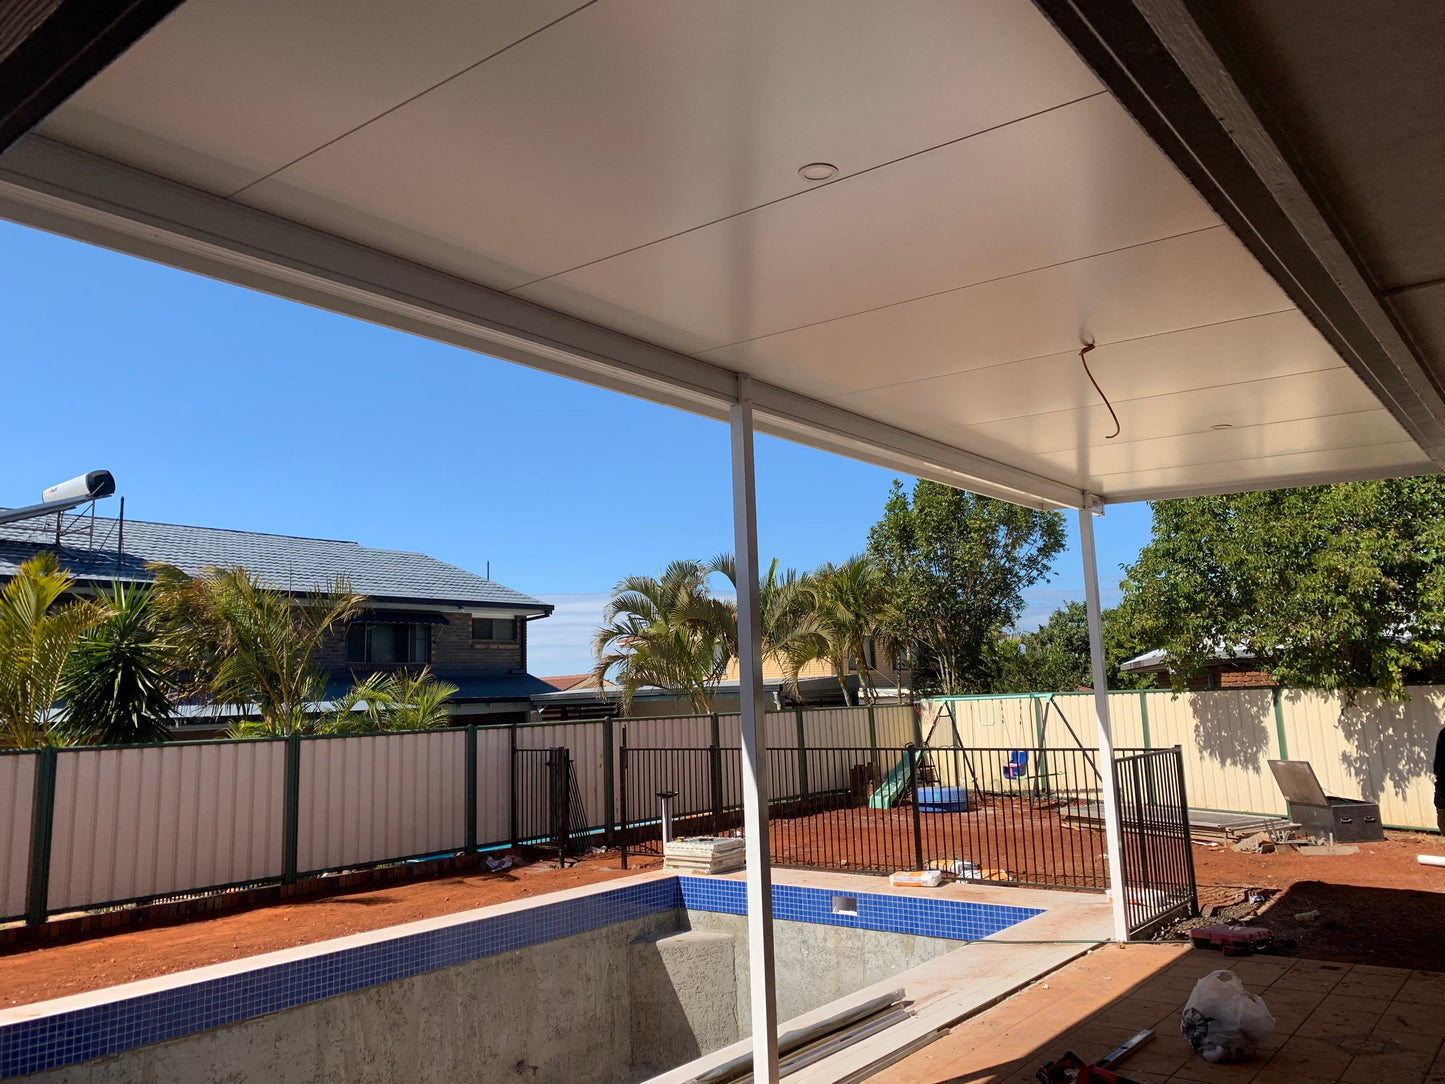 SmartKits Australia Insulated Flyover Roof- 13m (L) x 5m (W).